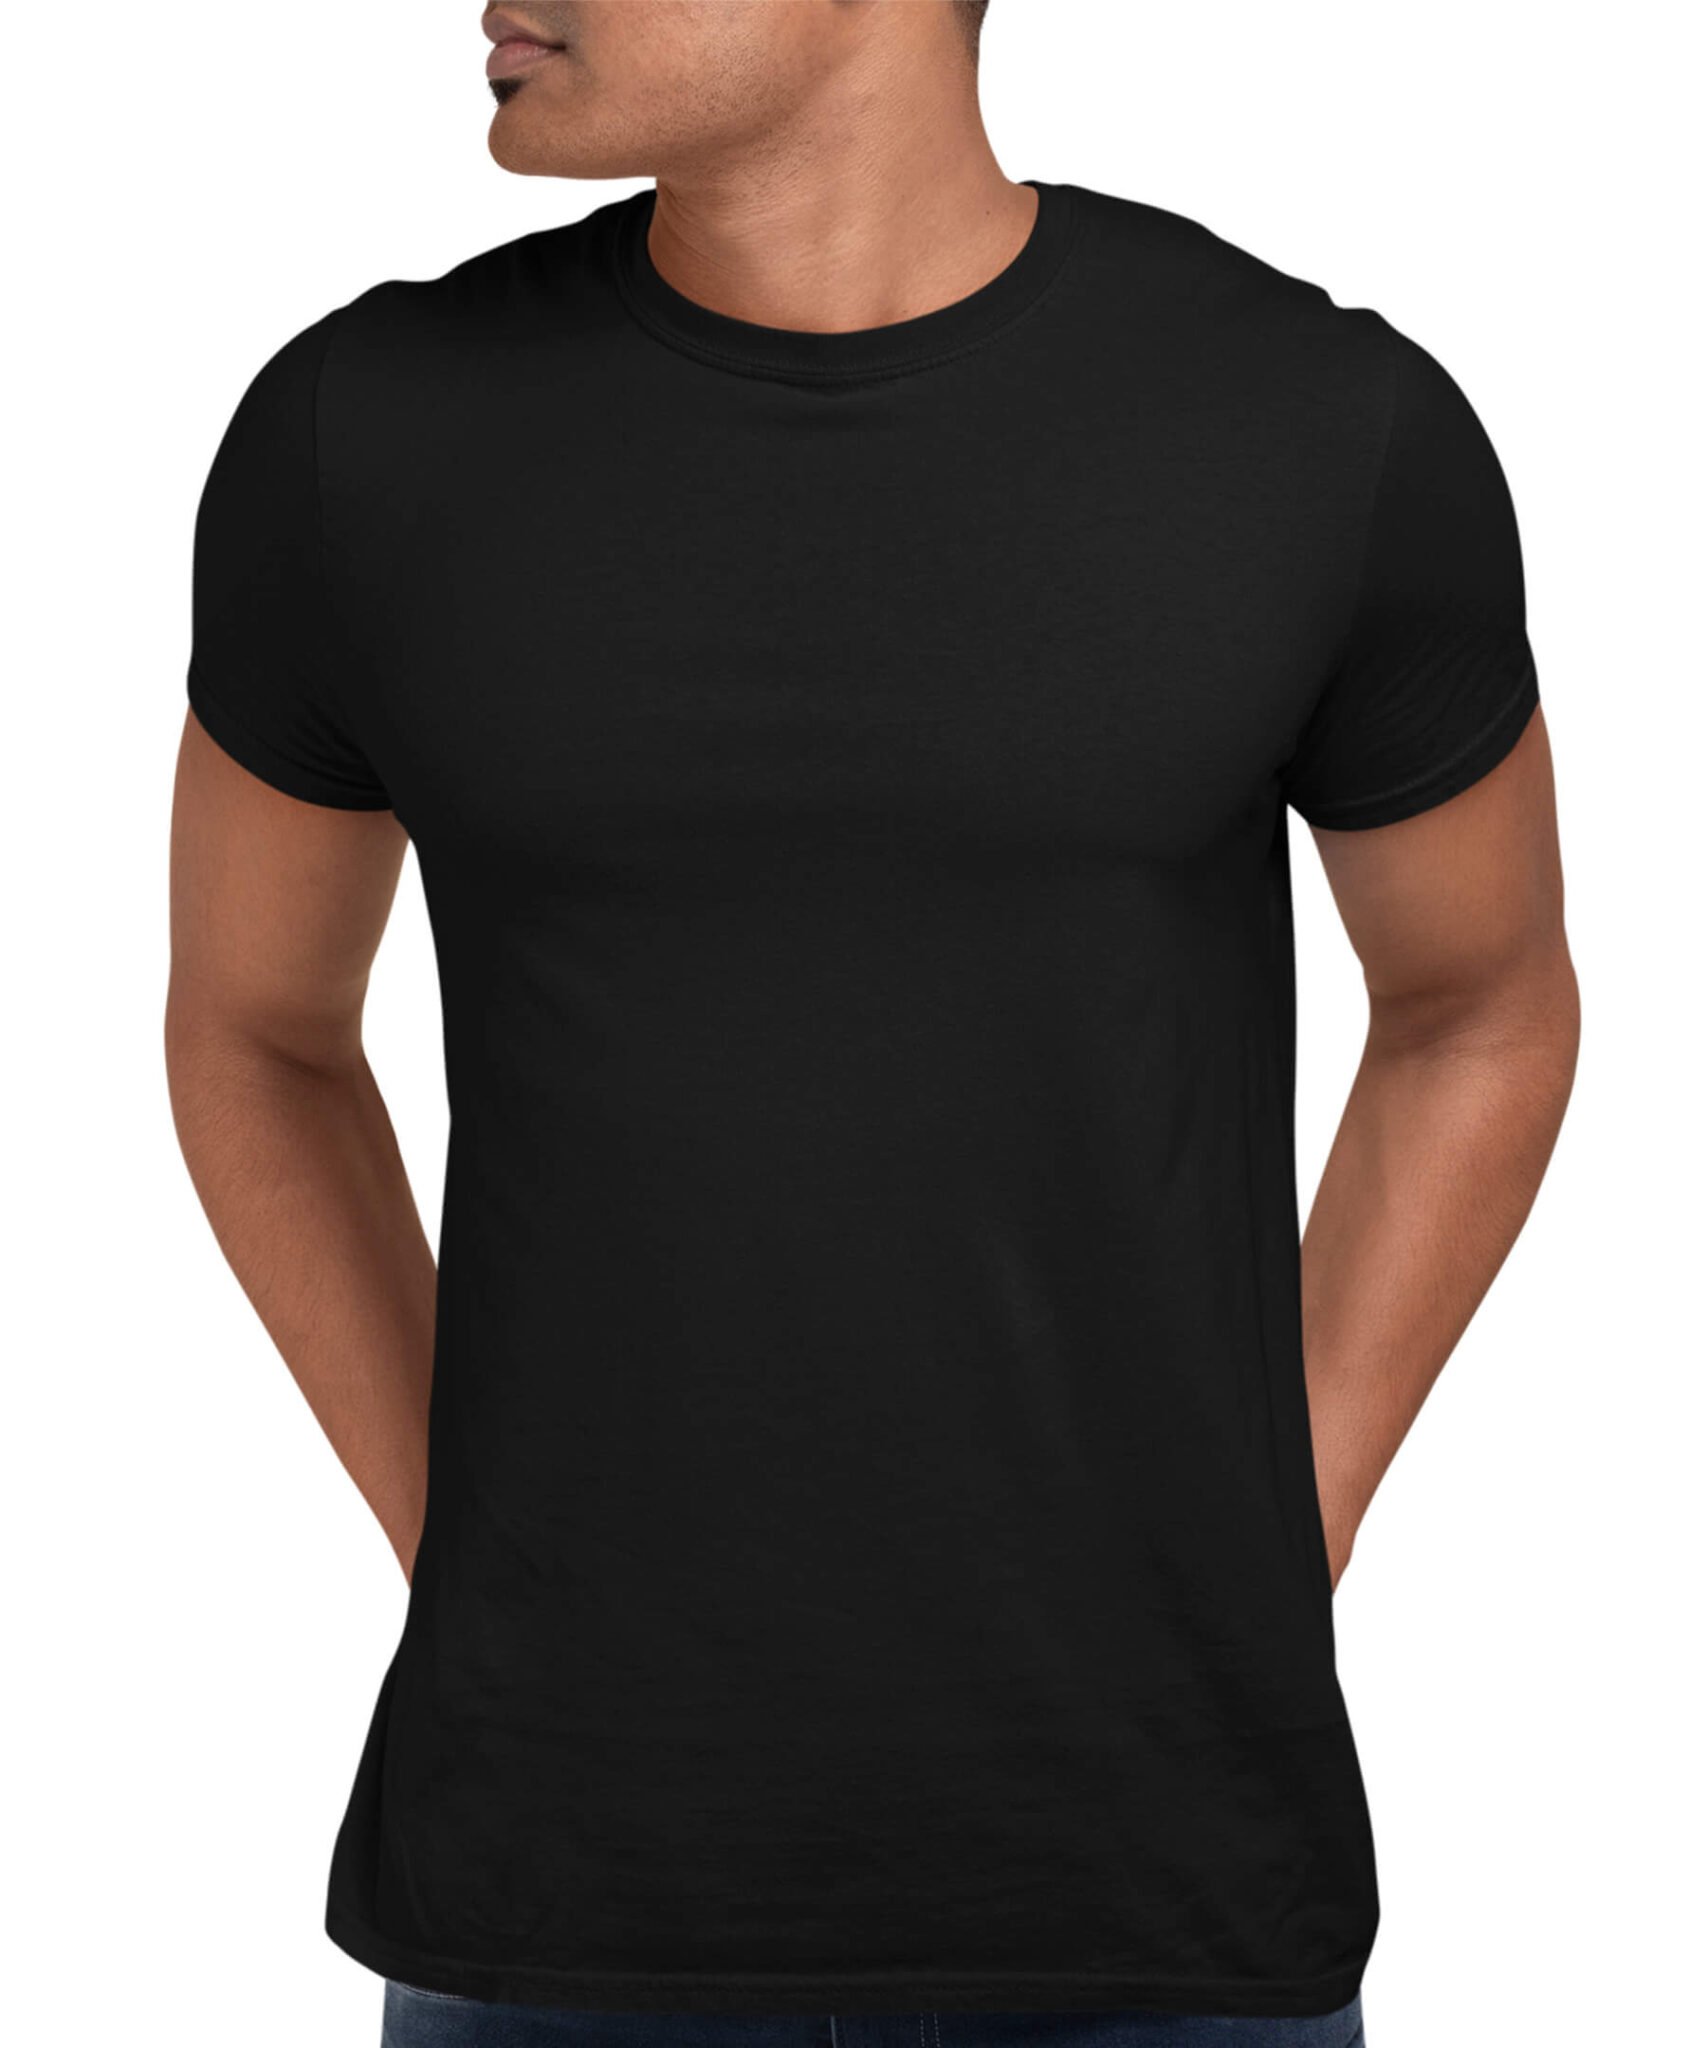 MEDLE Solid Black Men's T-shirt | Regular Fit Elegant Cotton Tee ...